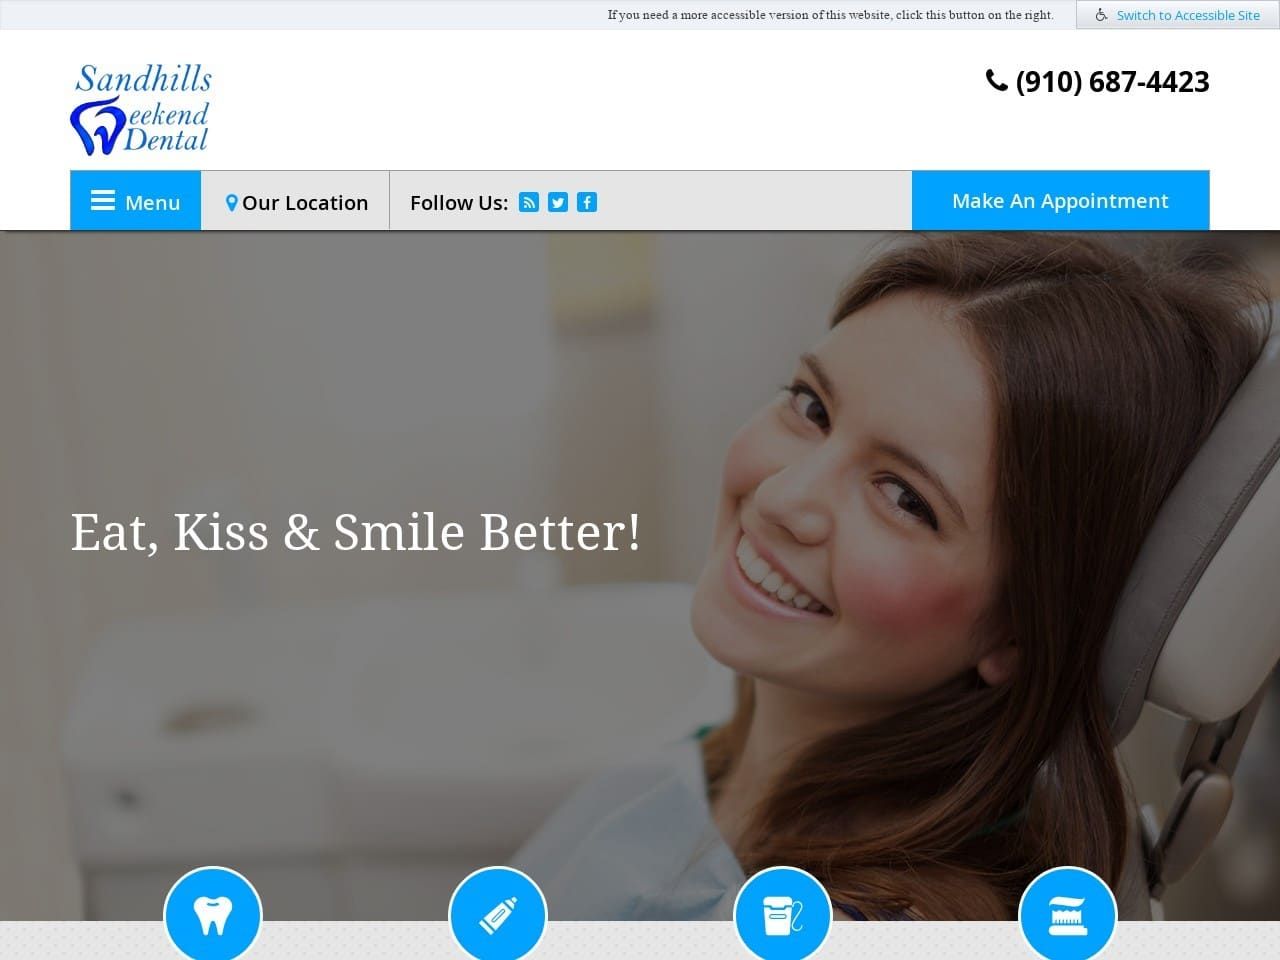 Sandhills Emergency Dental Clinic Website Screenshot from sandhillsweekenddental.com